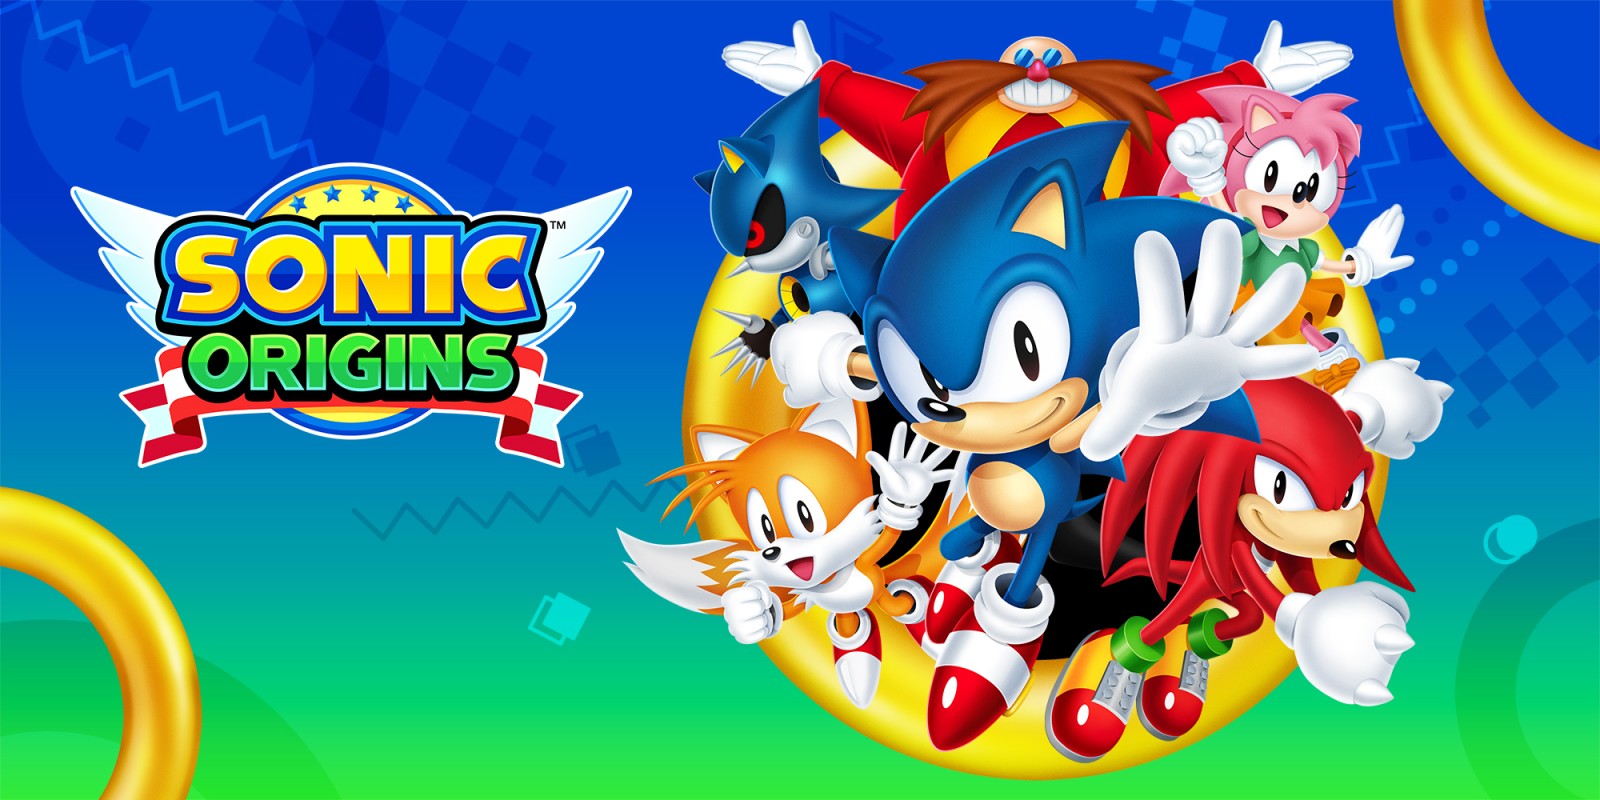 Sonic Origins | Nintendo Switch download software | Games | Nintendo